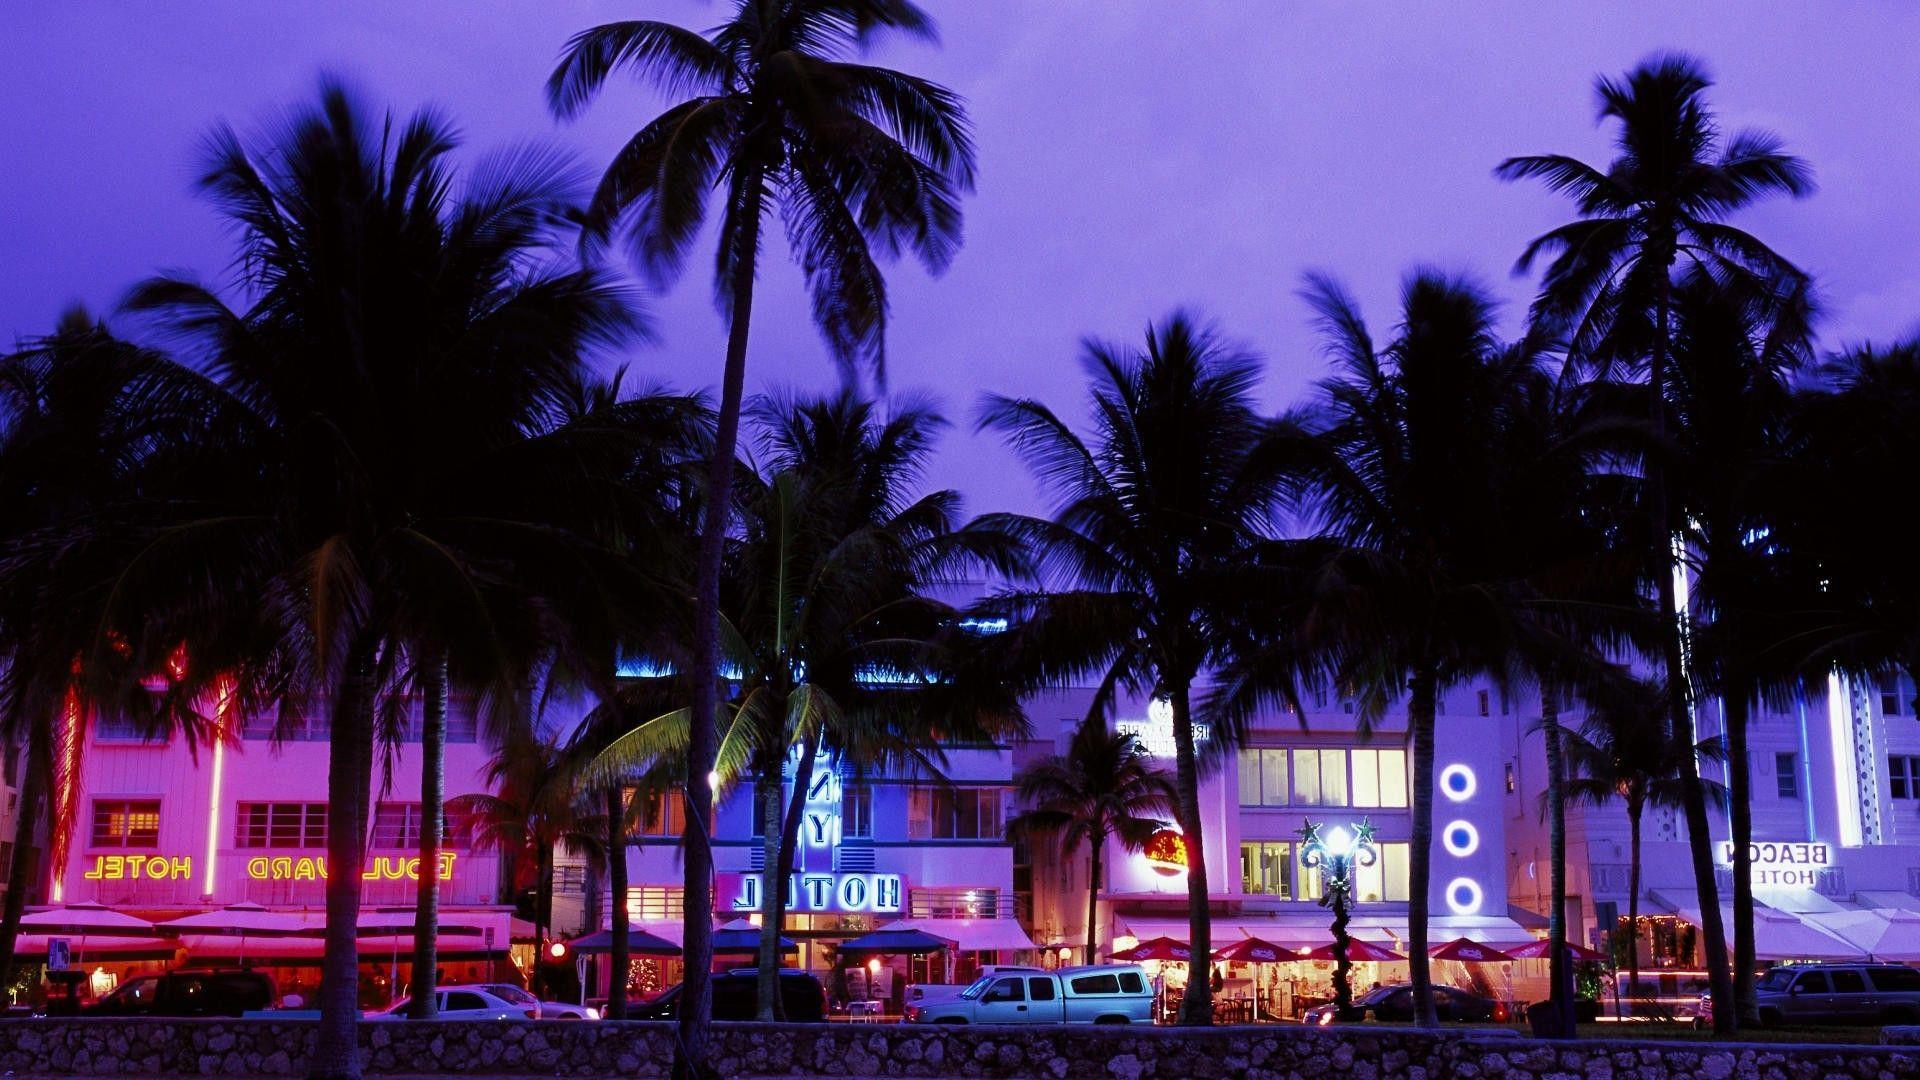 Grand Theft Auto Vice City, Hotels, Beach, Palm Trees, Neon